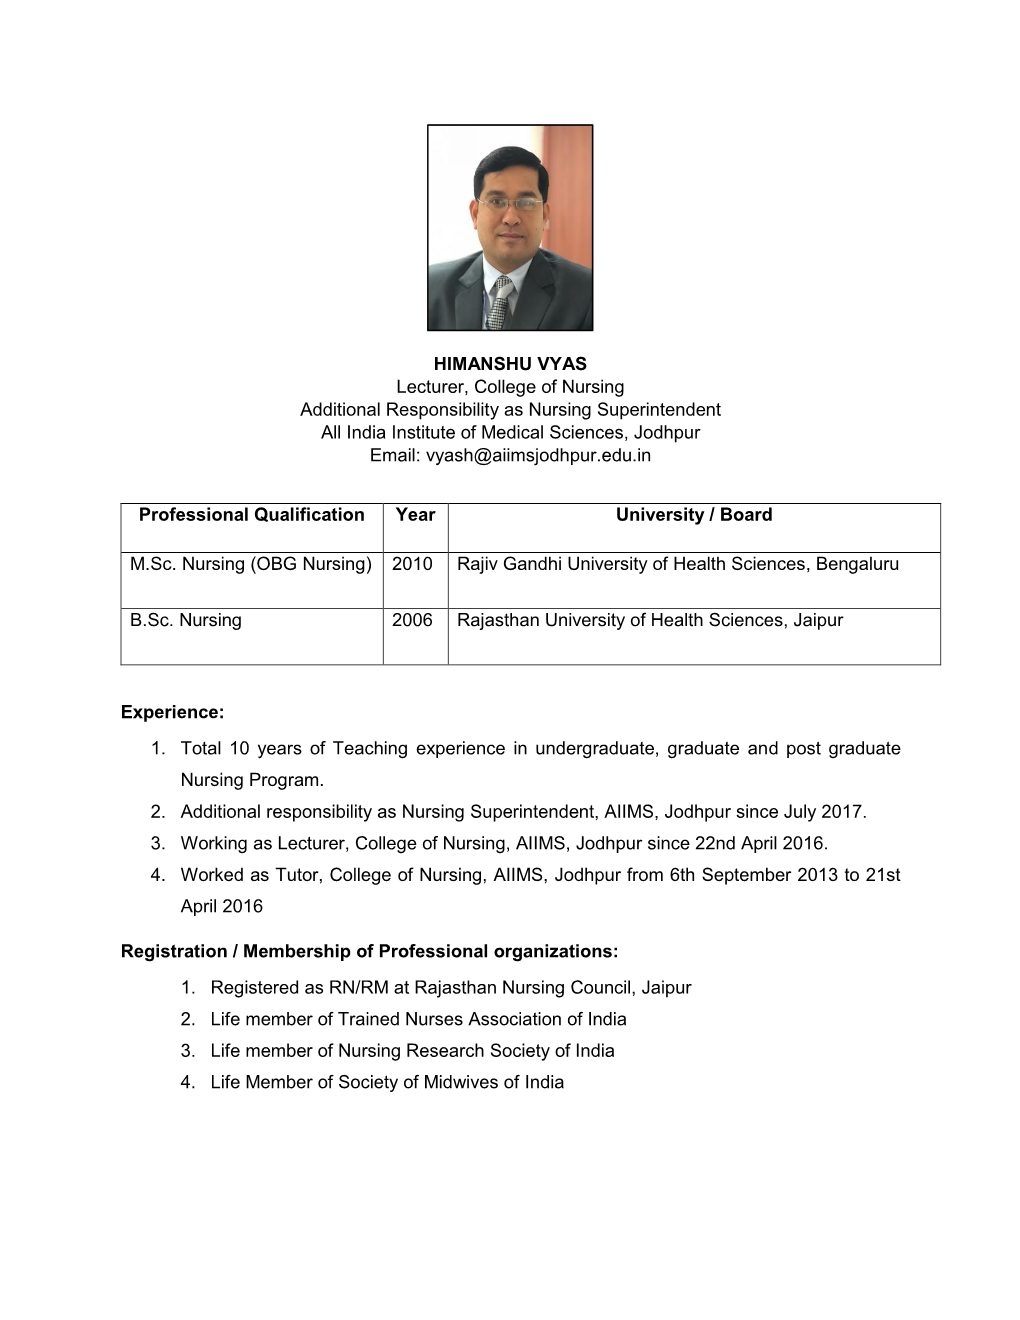 HIMANSHU VYAS Lecturer, College of Nursing Additional Responsibility